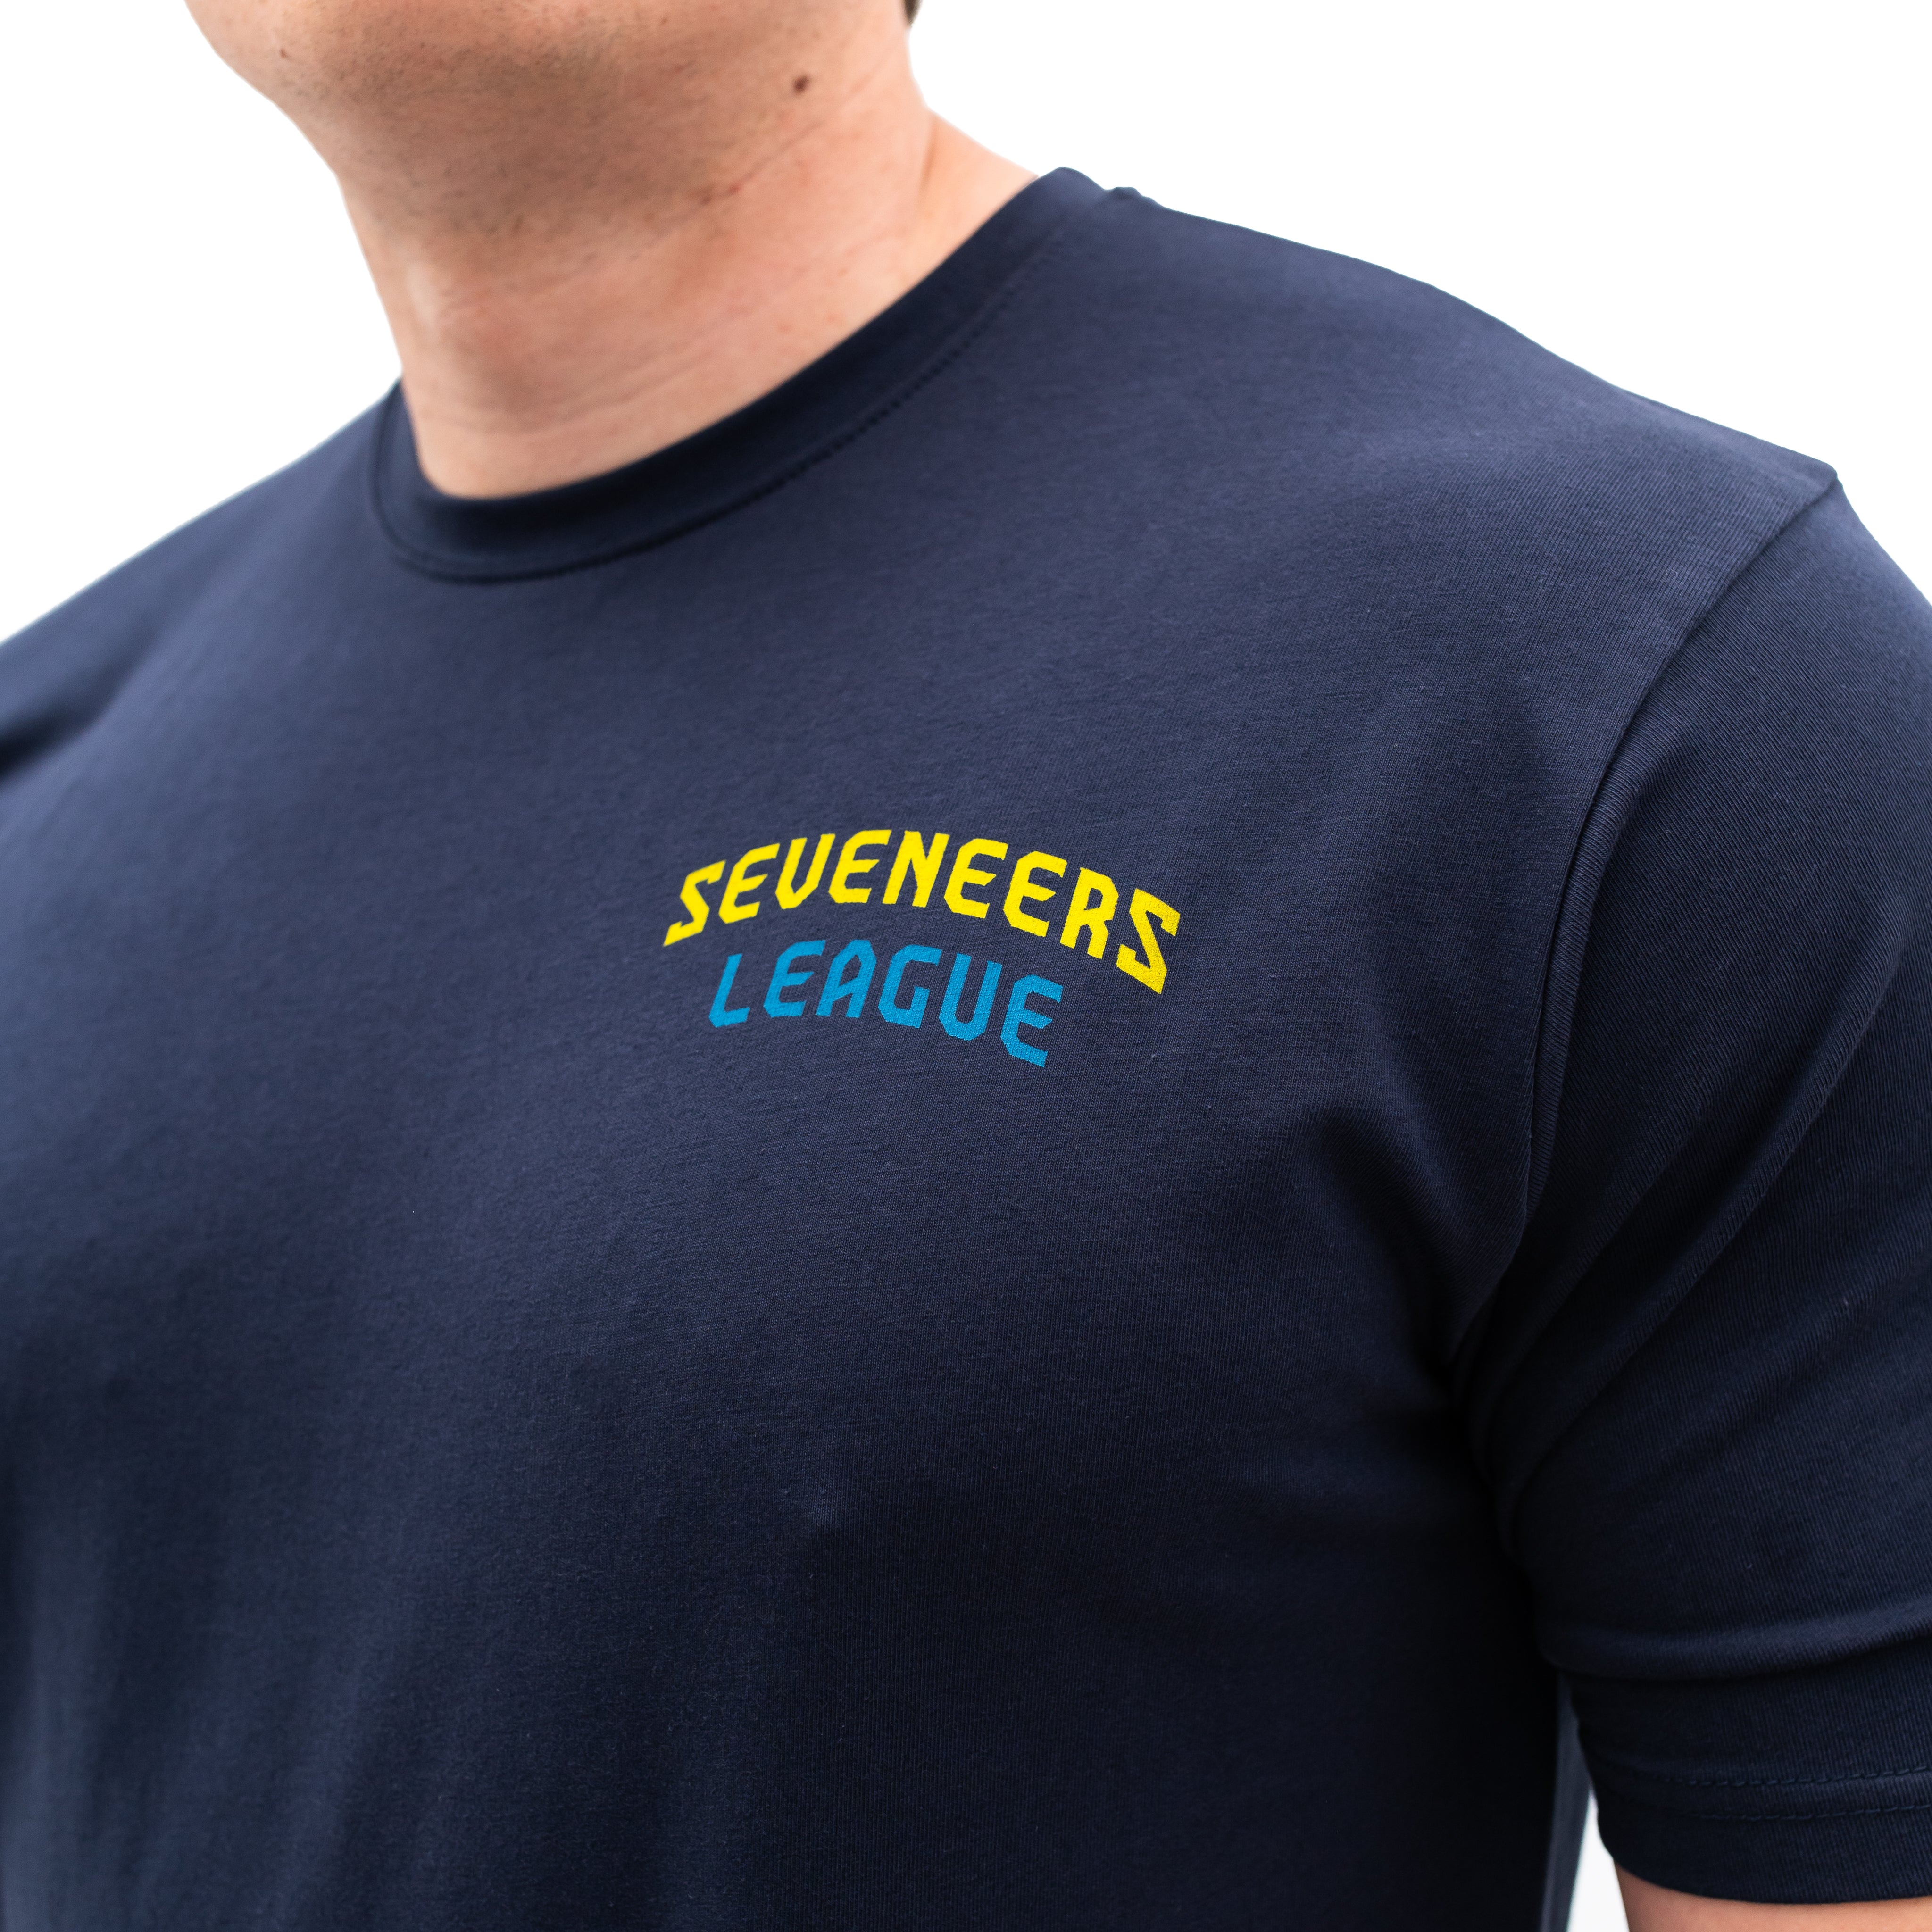 Seveneers League Non Bar Grip Men's Shirt